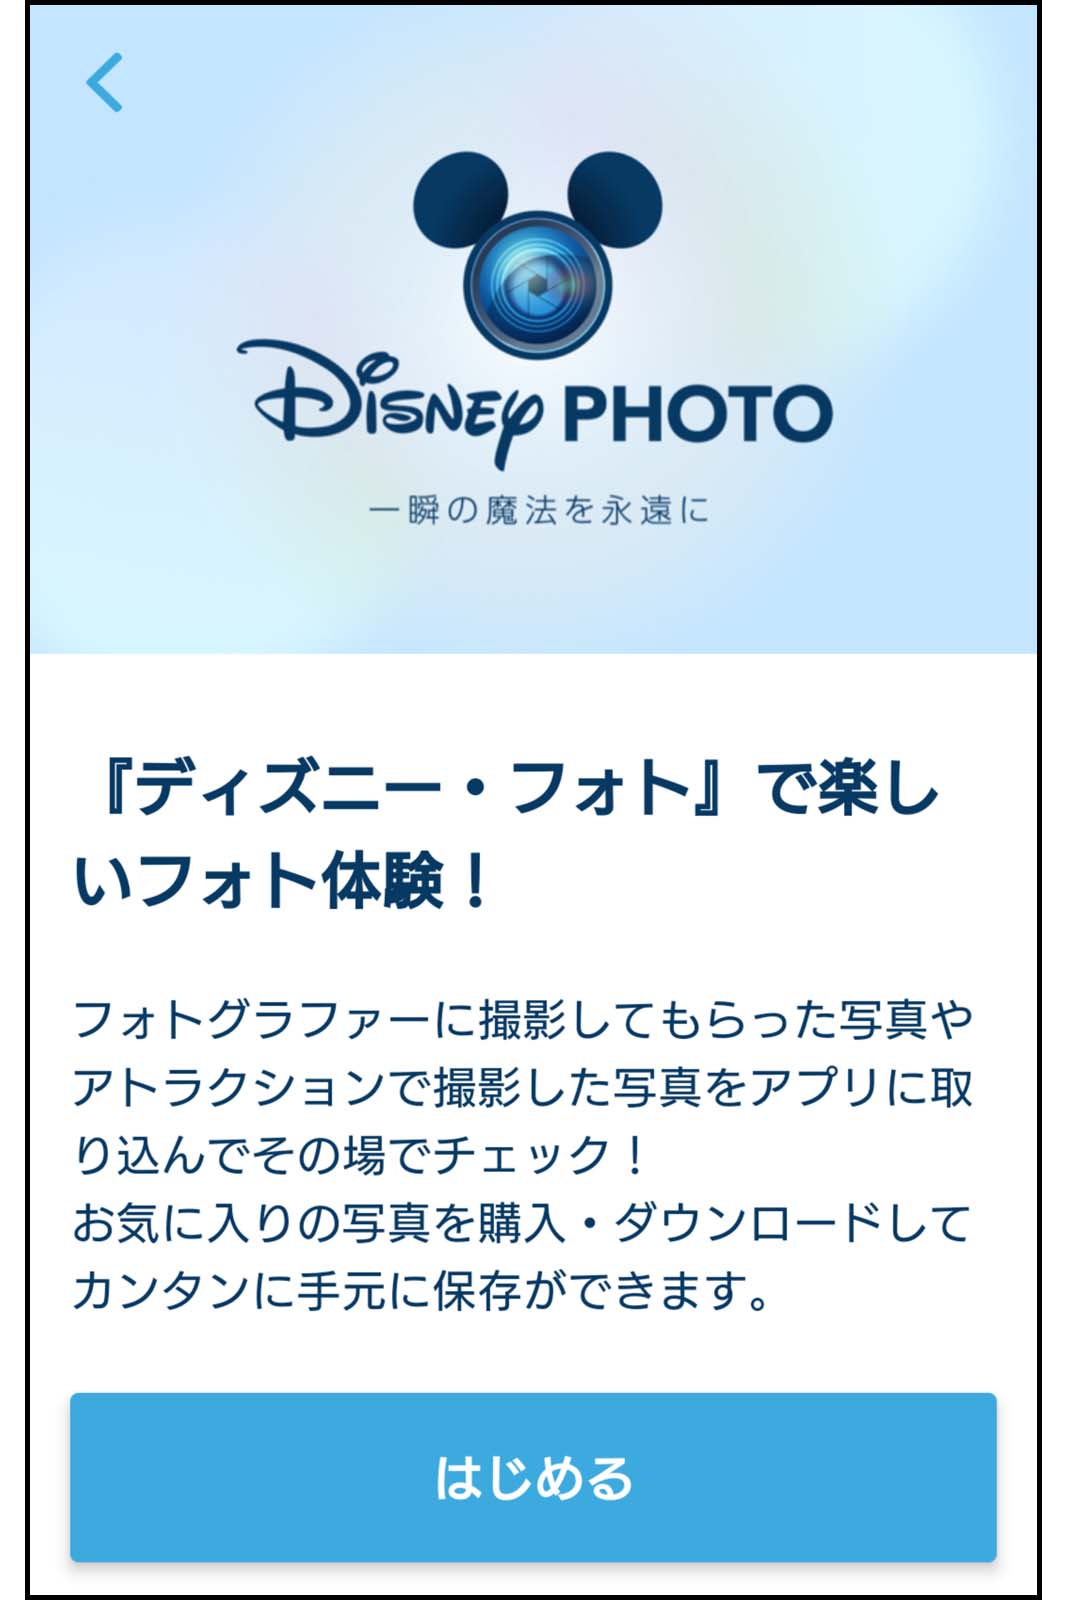 Tdr公式アプリがディズニーフォトに対応 アプリがフォトキーに Tdl Tdsのアトラク写真もdl購入可能 Disney Colors Blog